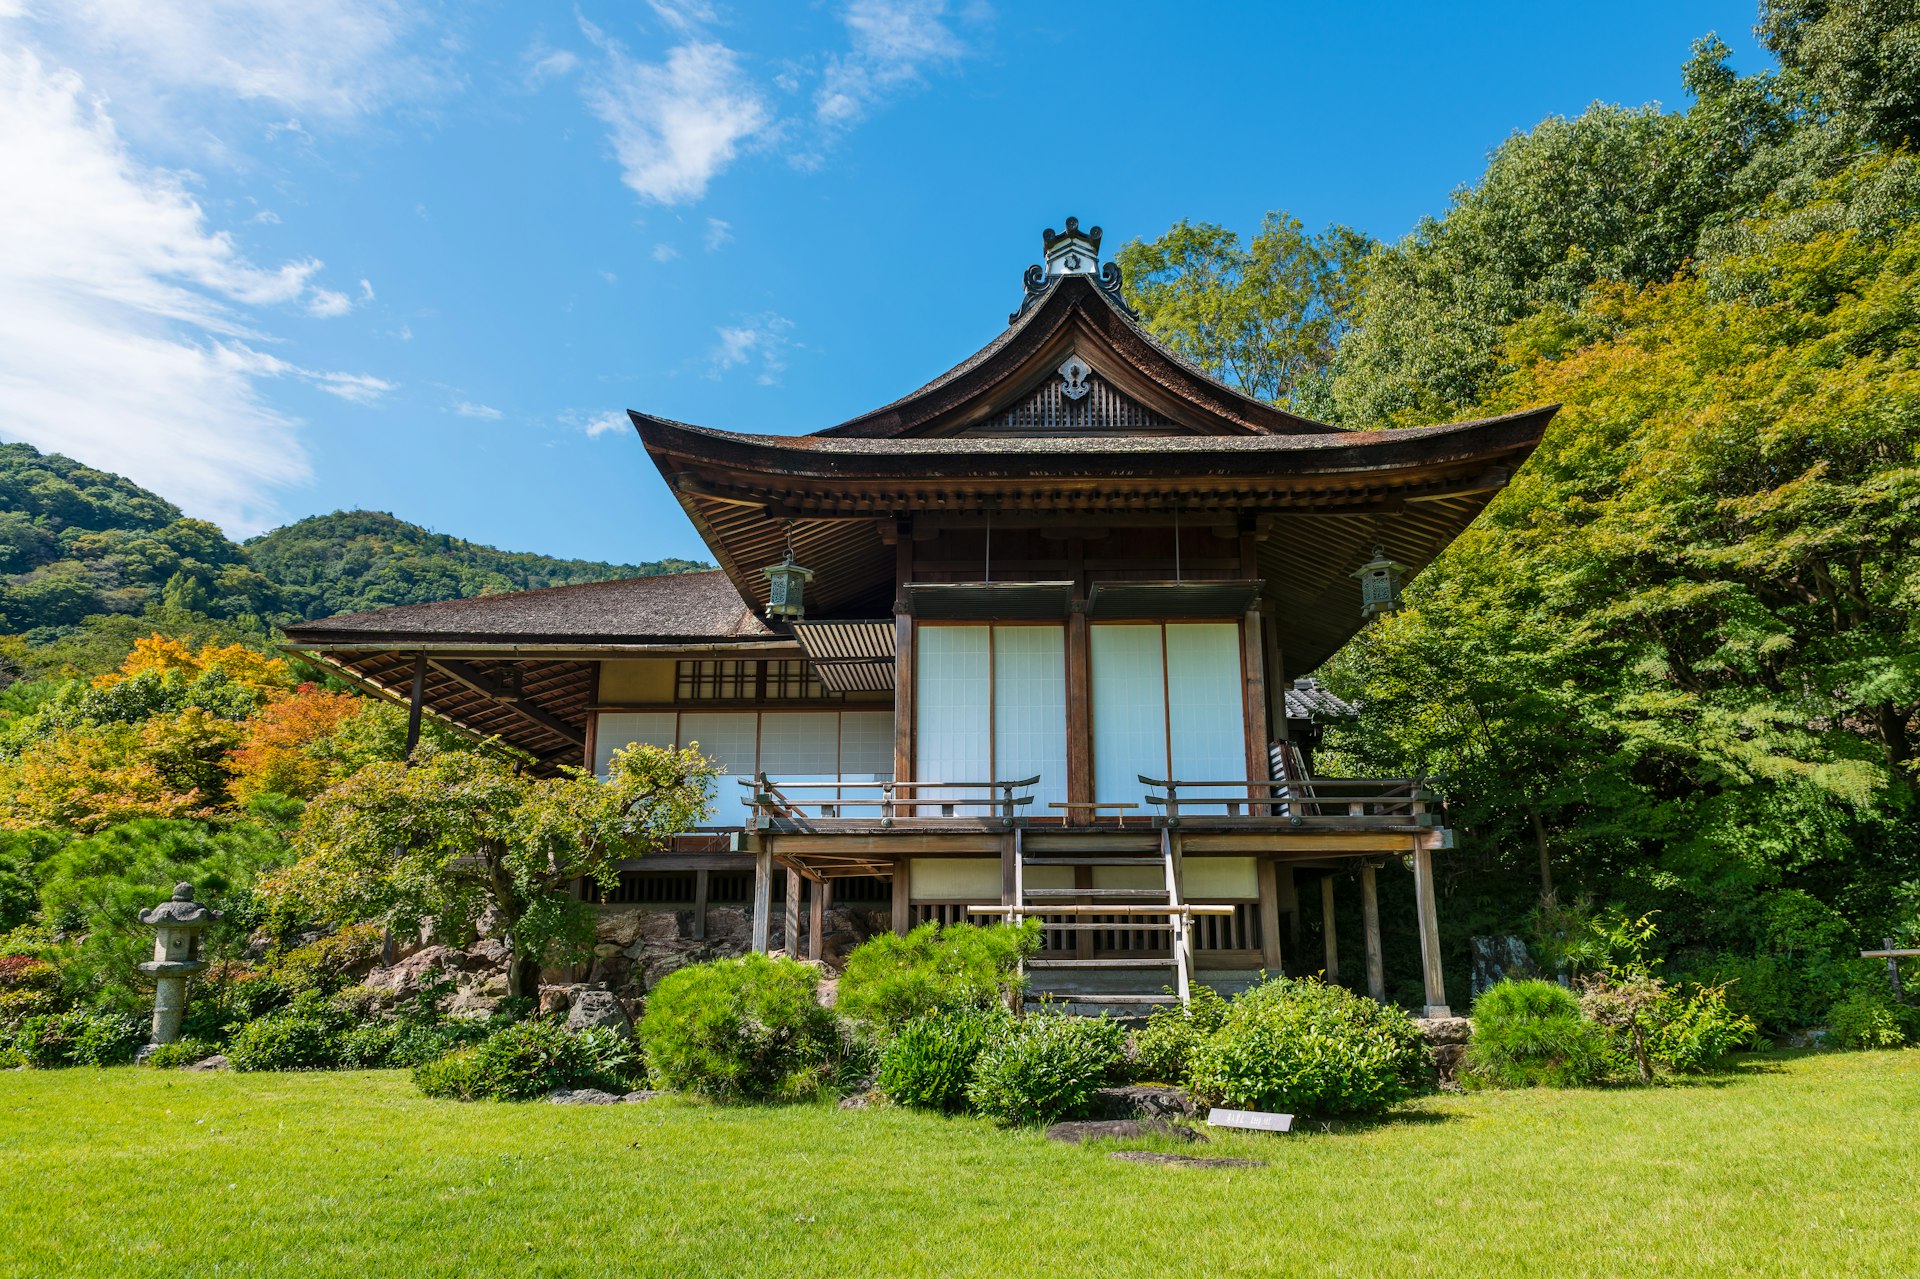 The mountain villa of Ōkōchi Sansō